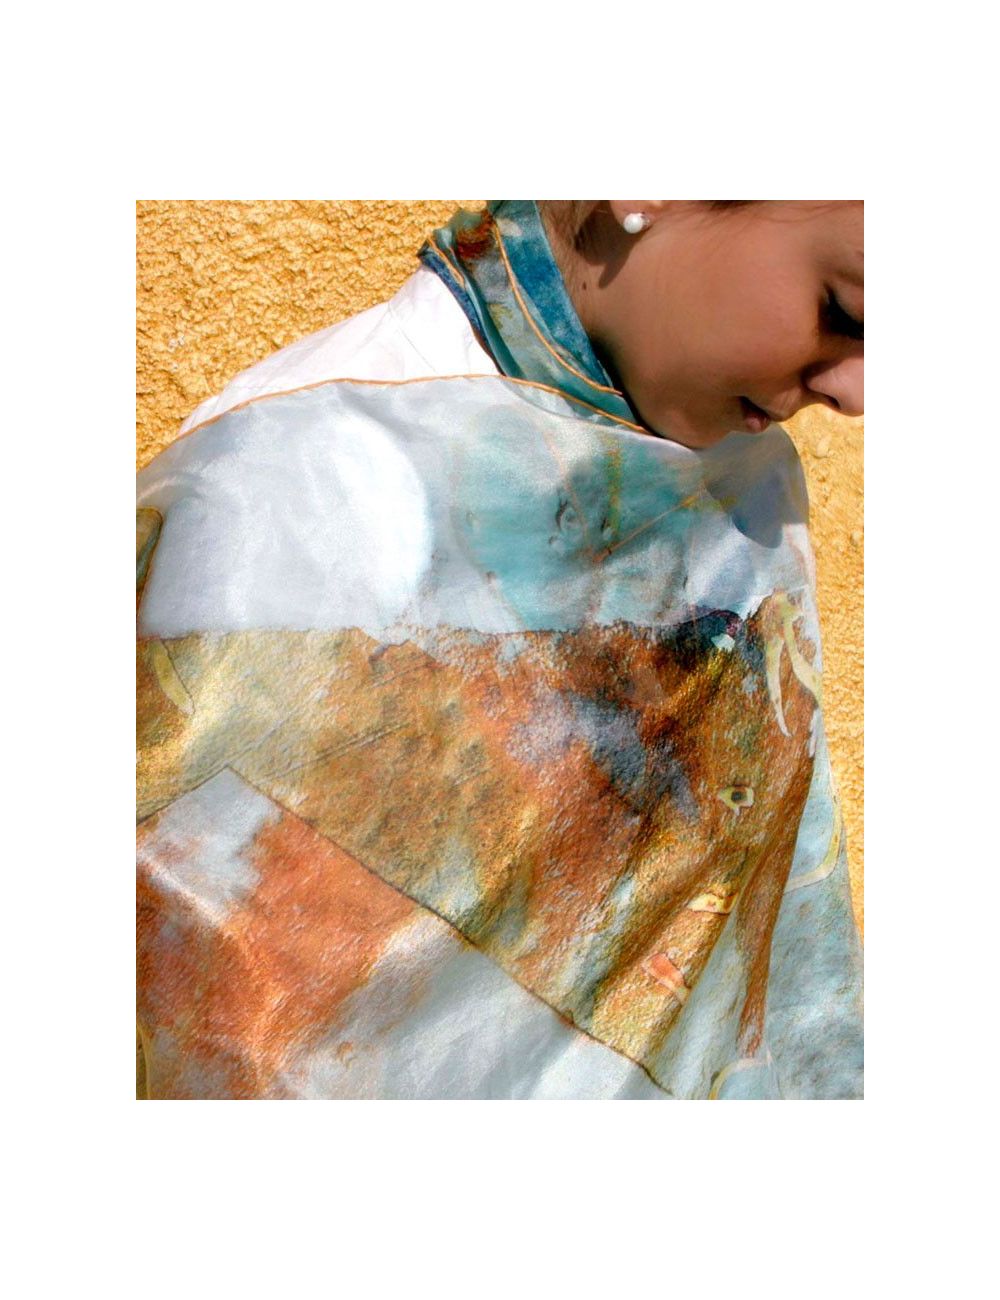 "Marine oxide", silk scarf on calm colors.